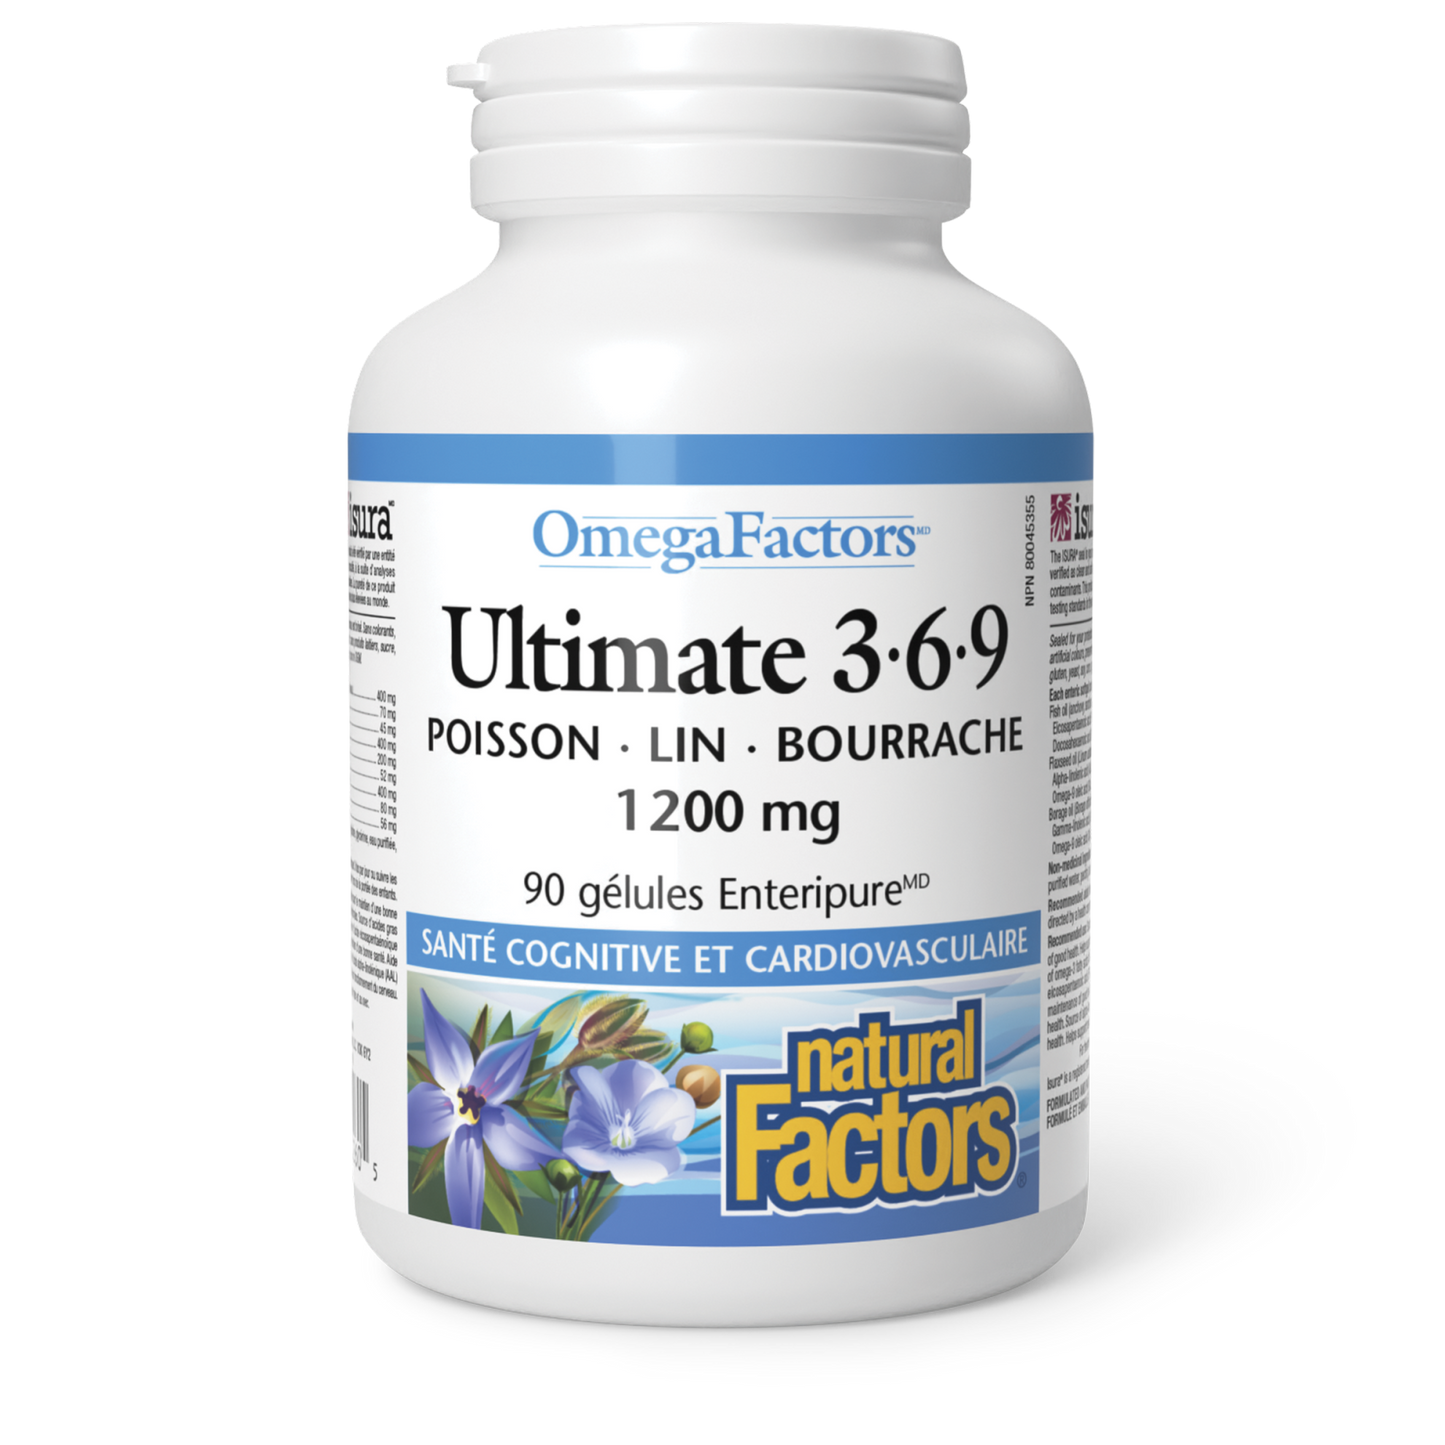 Ultimate 3•6•9 1 200 mg, OmegaFactors, Natural Factors|v|image|2260